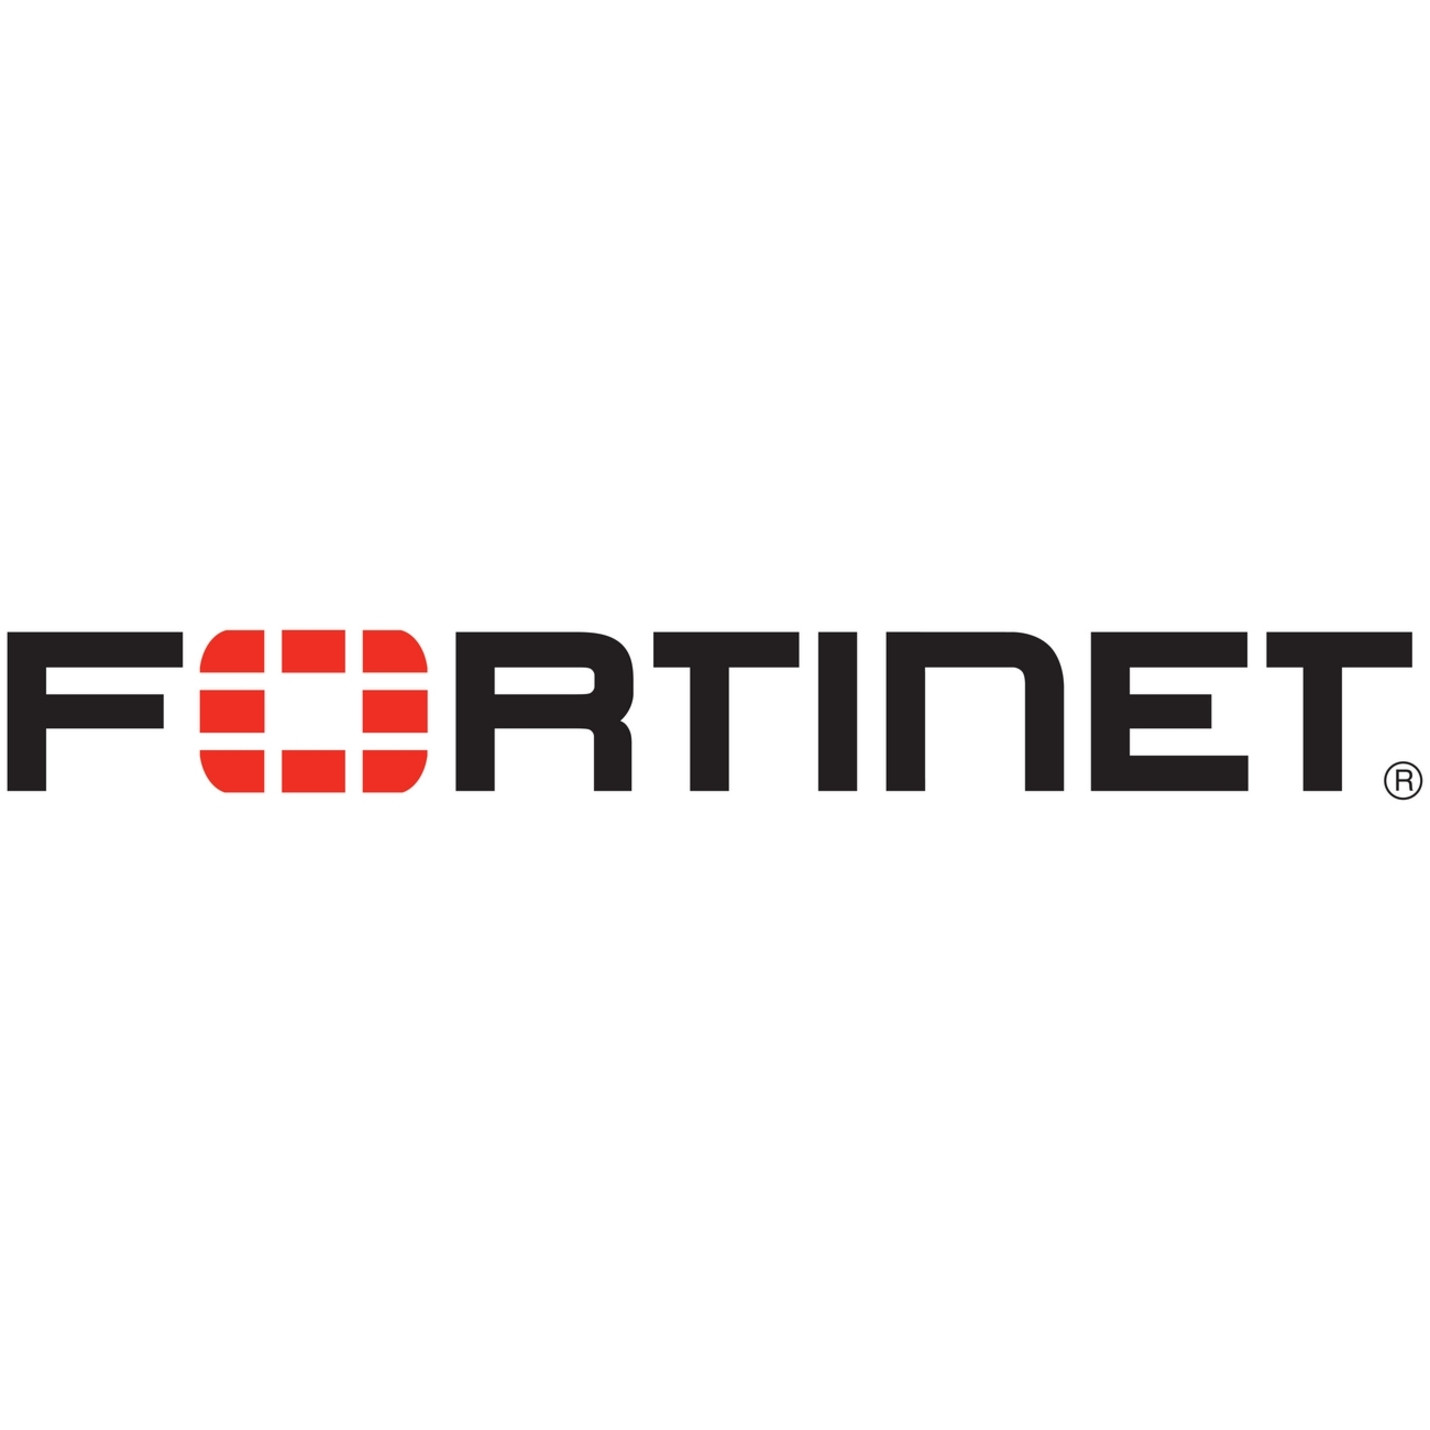 Fortinet Enterprise Bundle (FortiCare plus NGFW, AV, Web Filtering, Antispam, Botnet IP/Domain, FortiSandbox Cloud and Mobile Secu… FC-10-7K6E1-871-0…